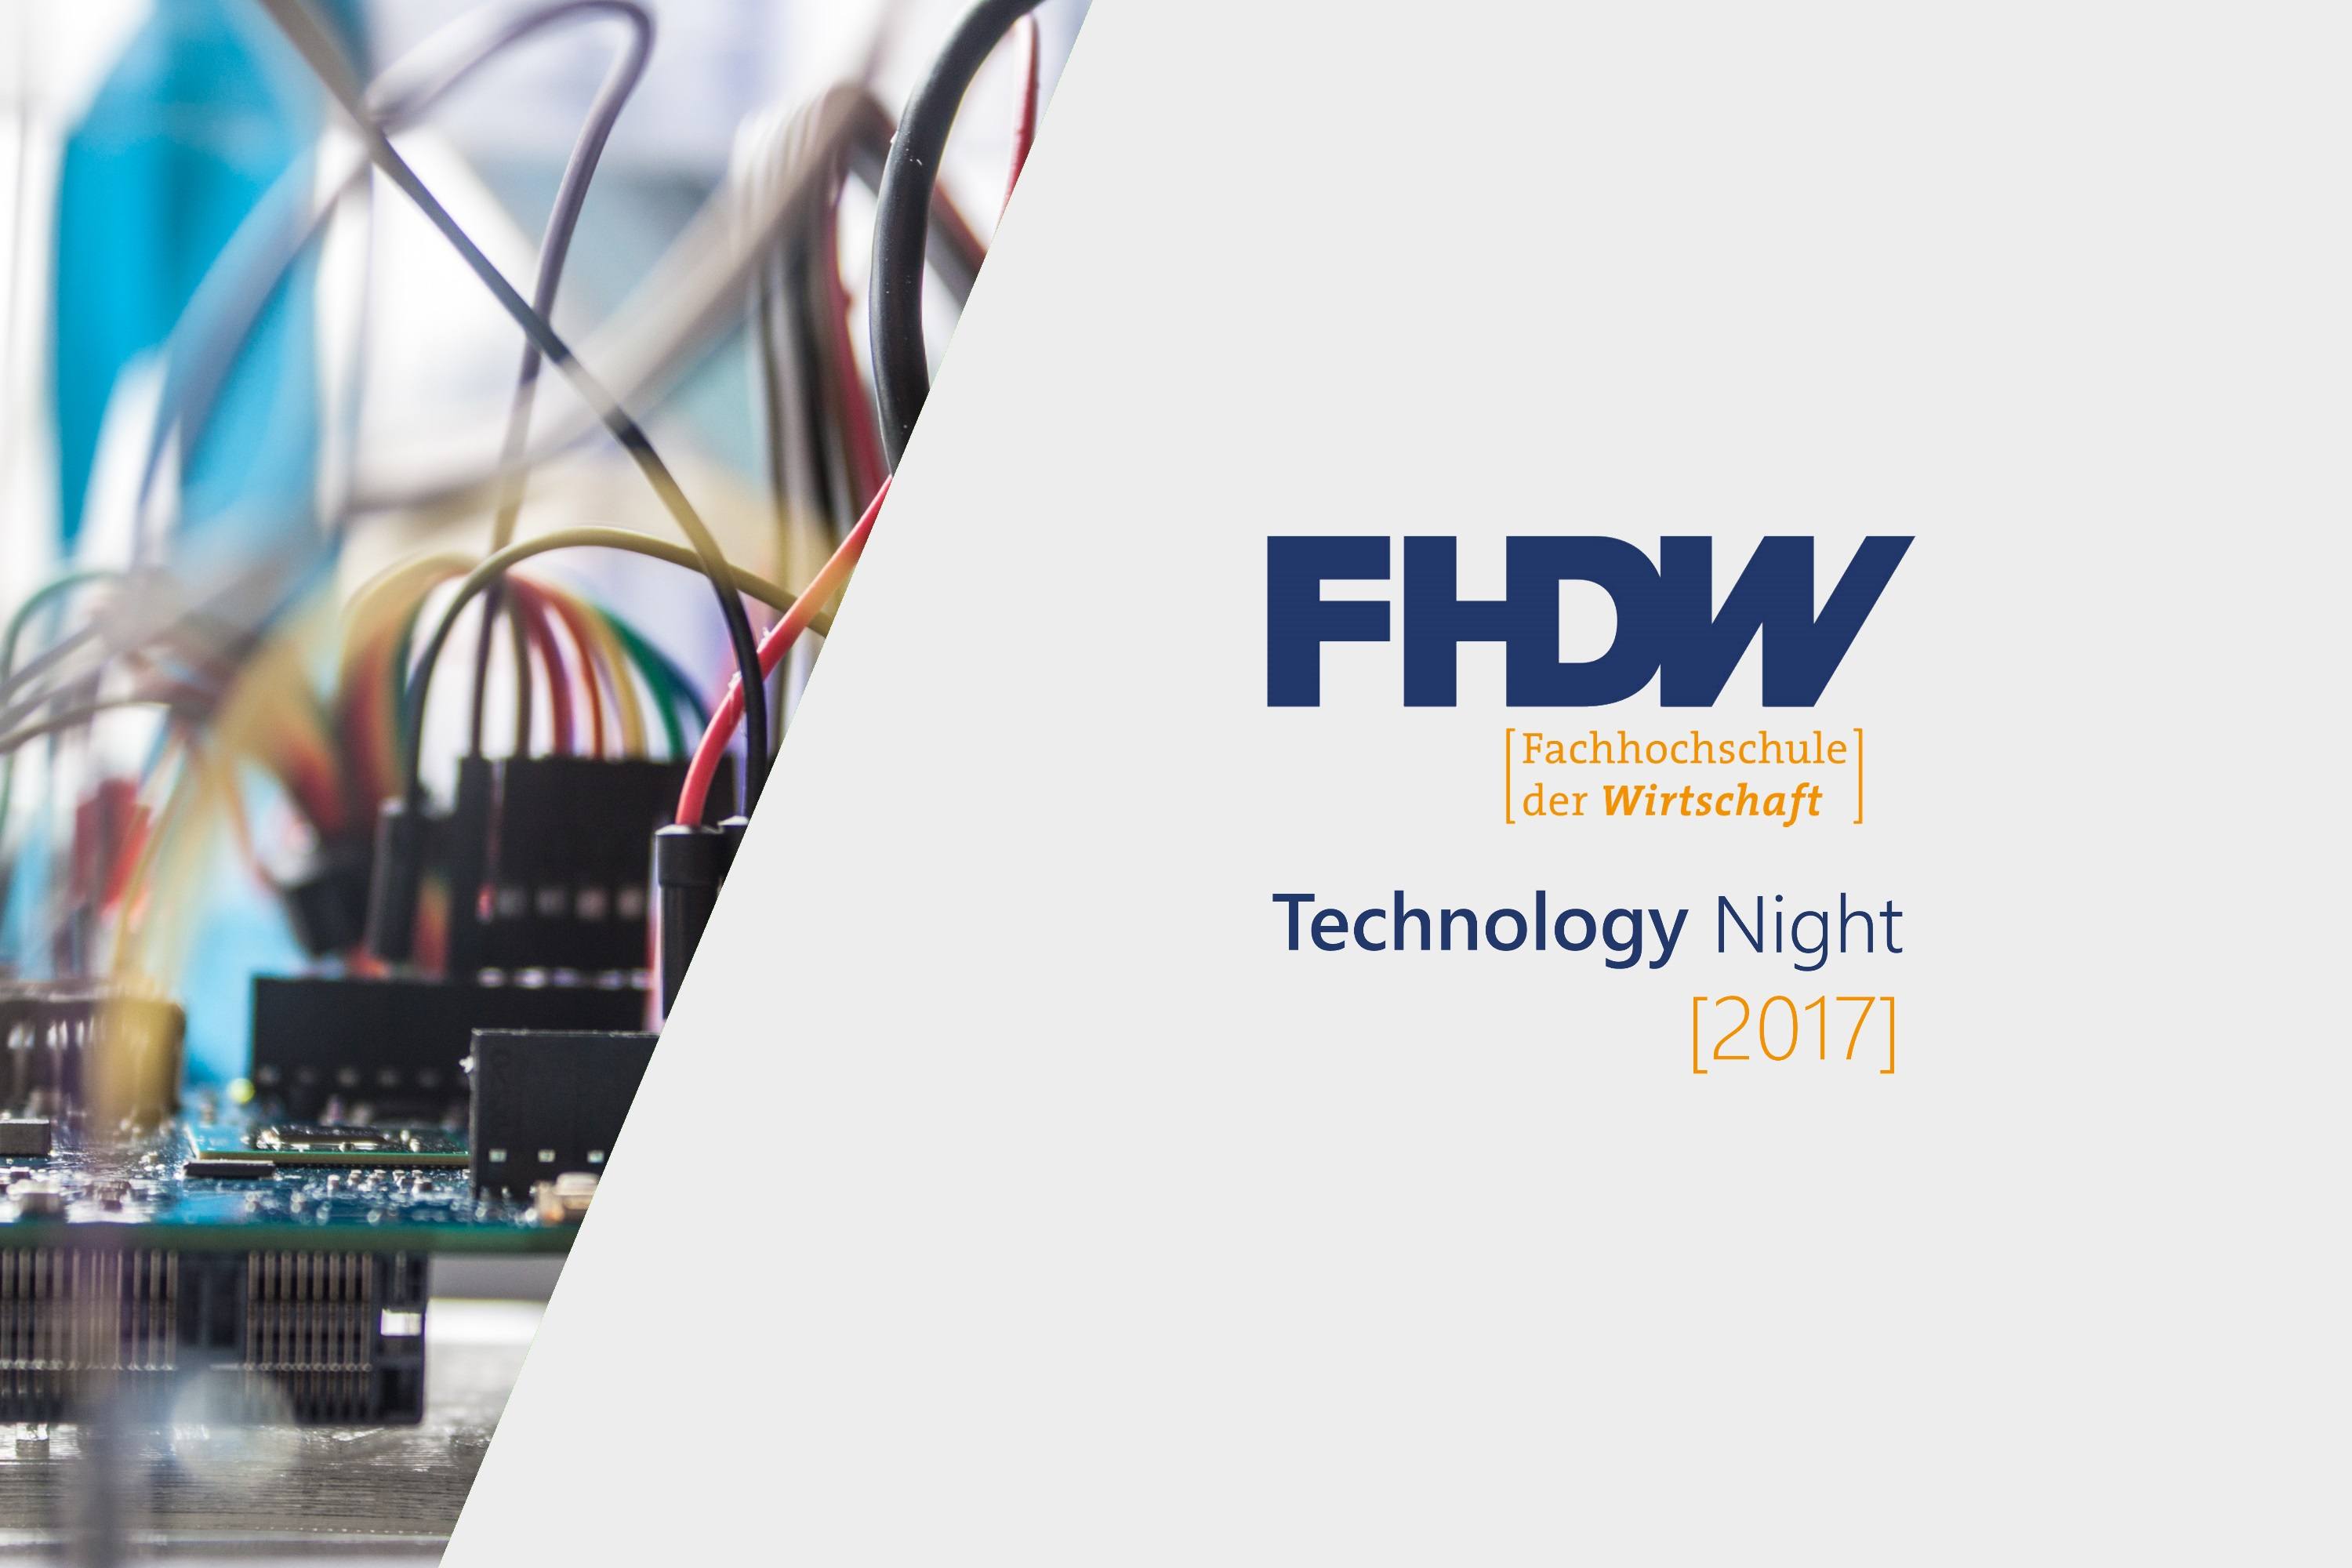 FHDW Technology Night 2017 am 30. Juni 2017